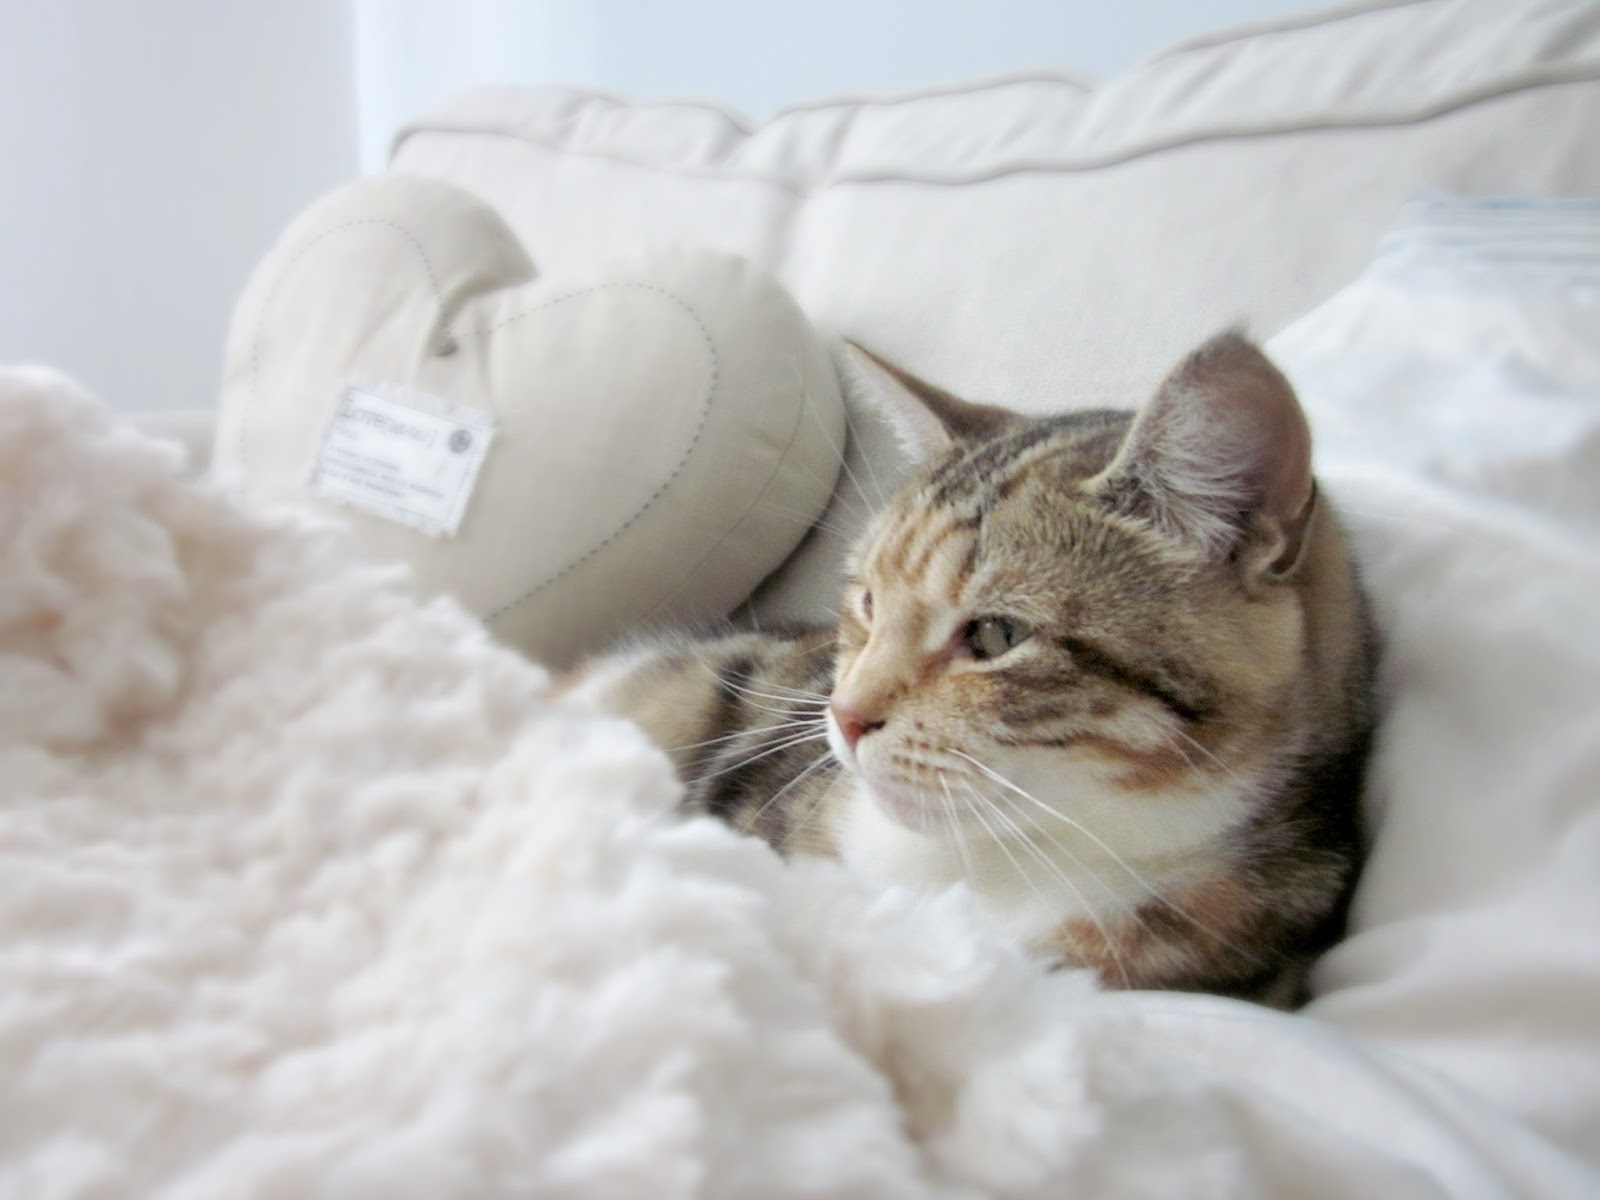 Tortoiseshell cat on sofa with blanket and cushion